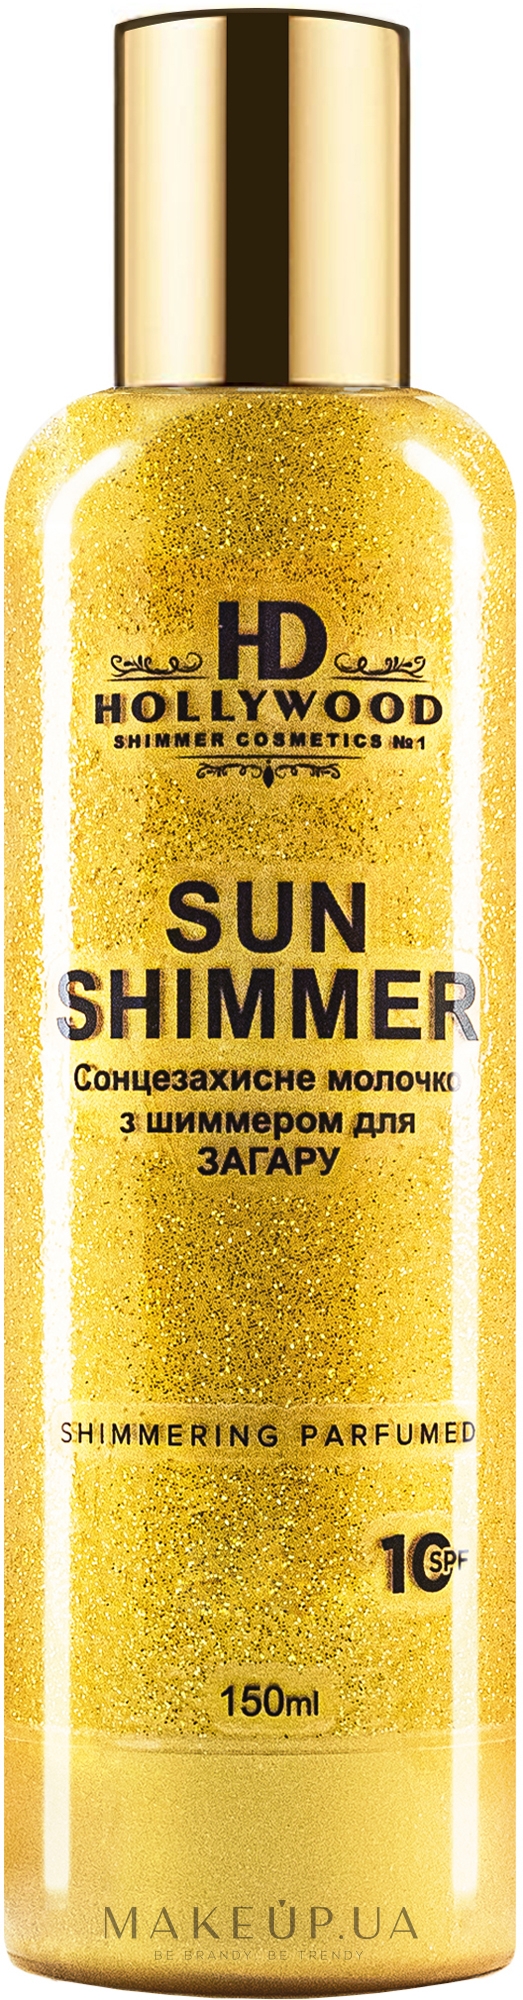 Молочко для загара с шиммером - HD Hollywood Sun Shimmer Body Milk SPF 10 — фото 150ml